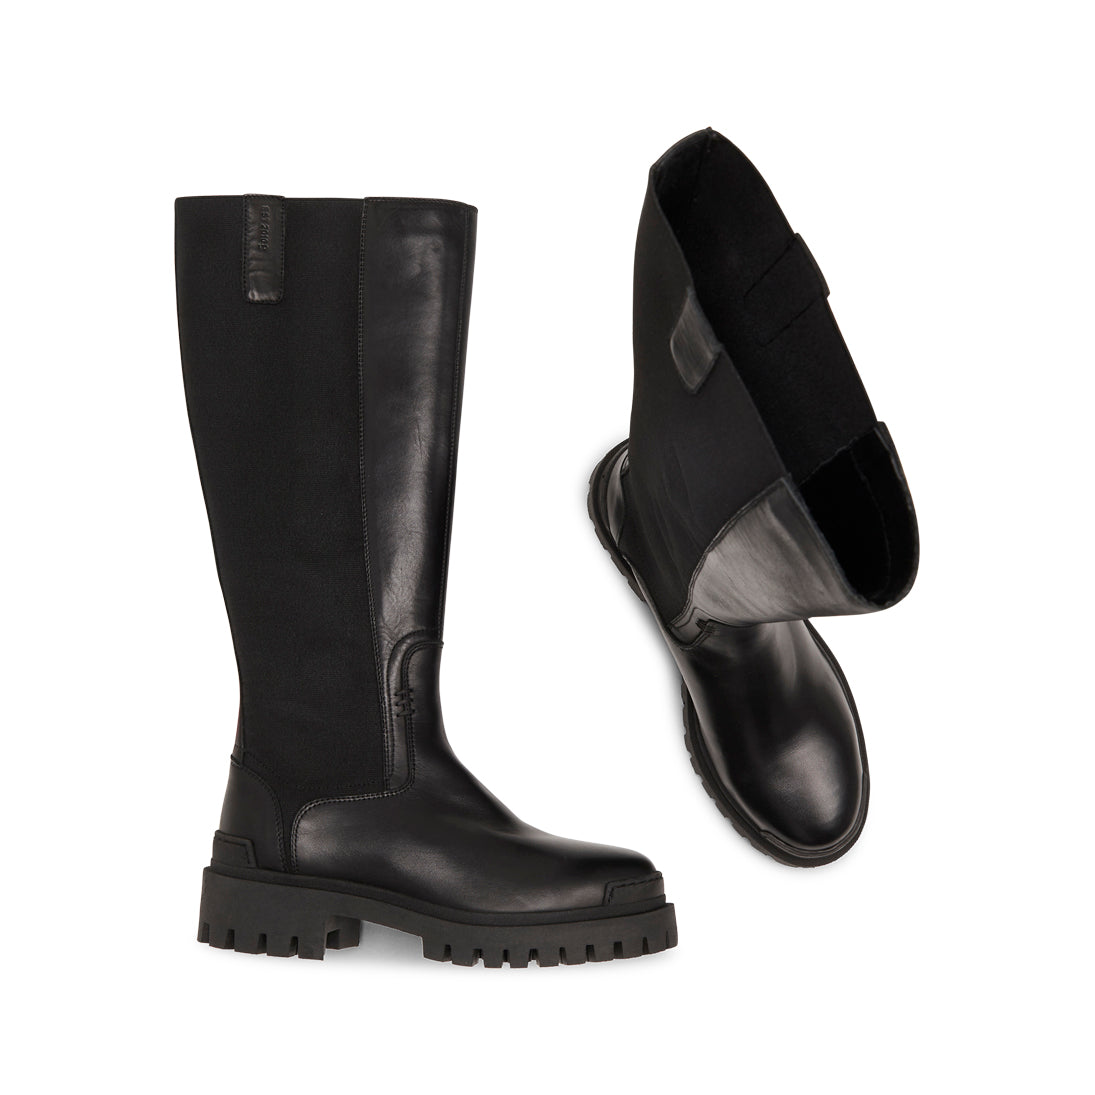 Pavement Mandy Long boots Black/Black 021